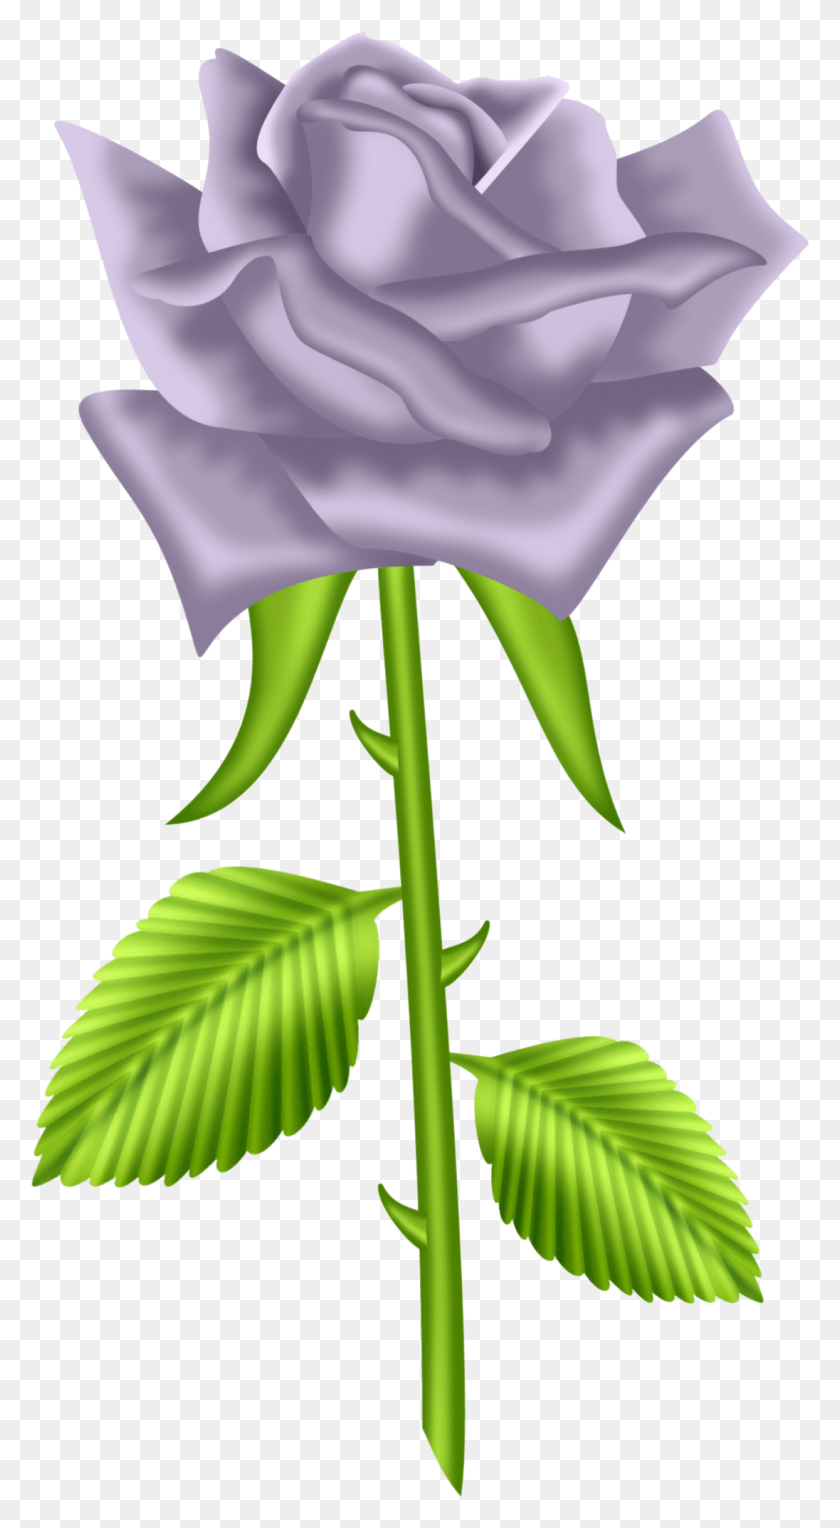 1096x2063 Site Russe Blanco Y Negro Rosas Clipart Design Siempre Pienso En Ti Mi Ngel, Plant, Flower, Blossom Hd Png